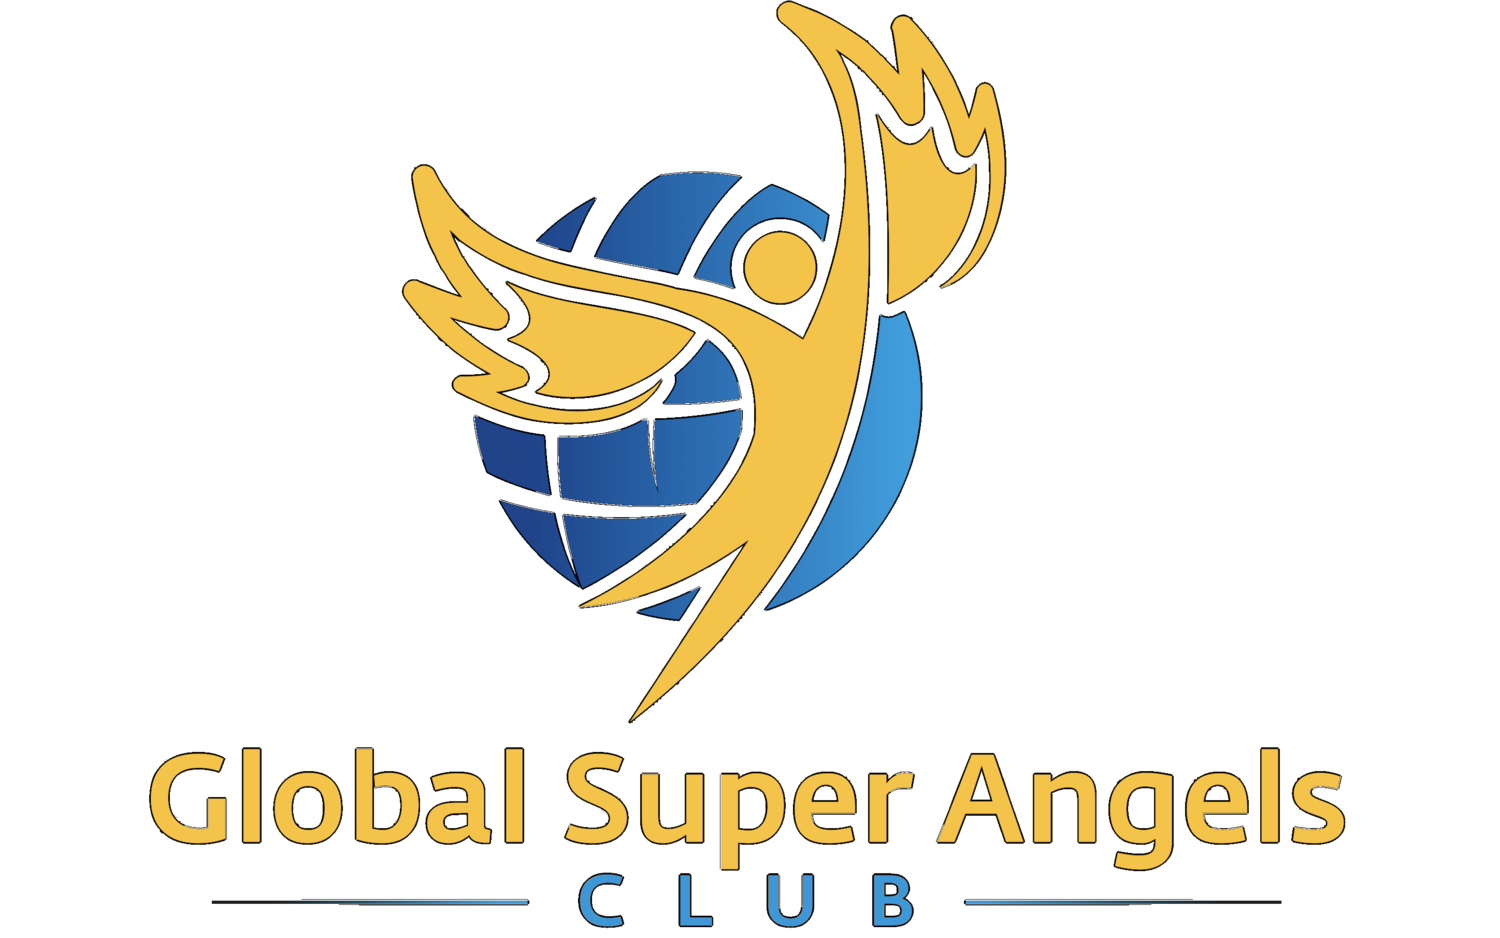 Global Super Angels Club